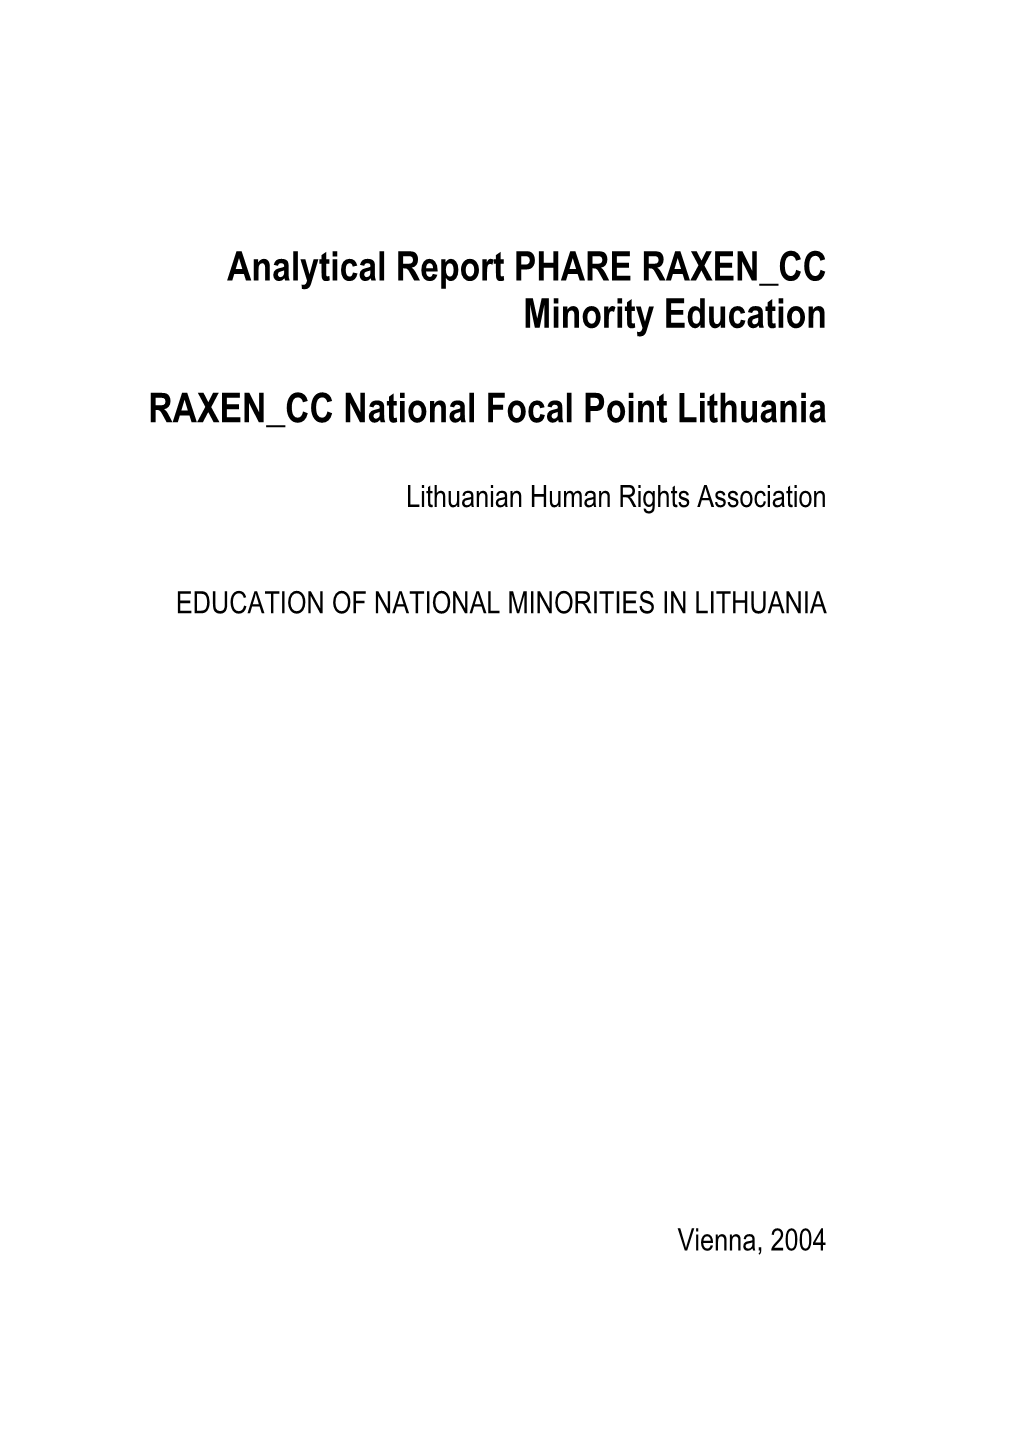 Analytical Report PHARE RAXEN CC Minority Education RAXEN CC National Focal Point Lithuania